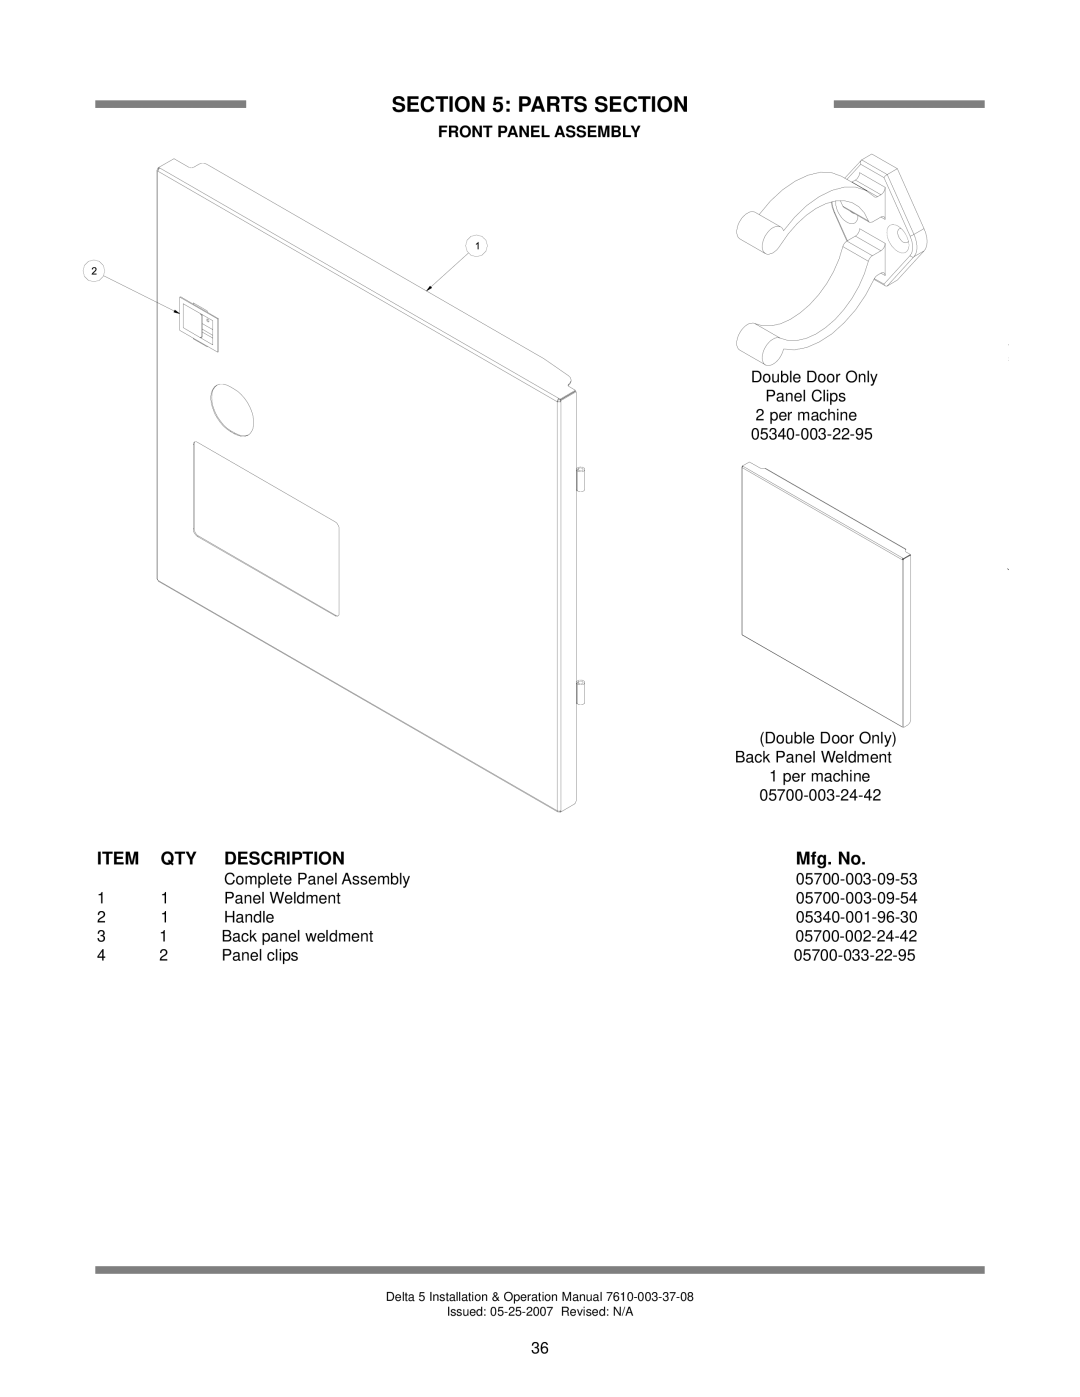 Jackson Delta 5, DELTA 5 D technical manual Front Panel Assembly, Parts Section, Description, Mfg. No 